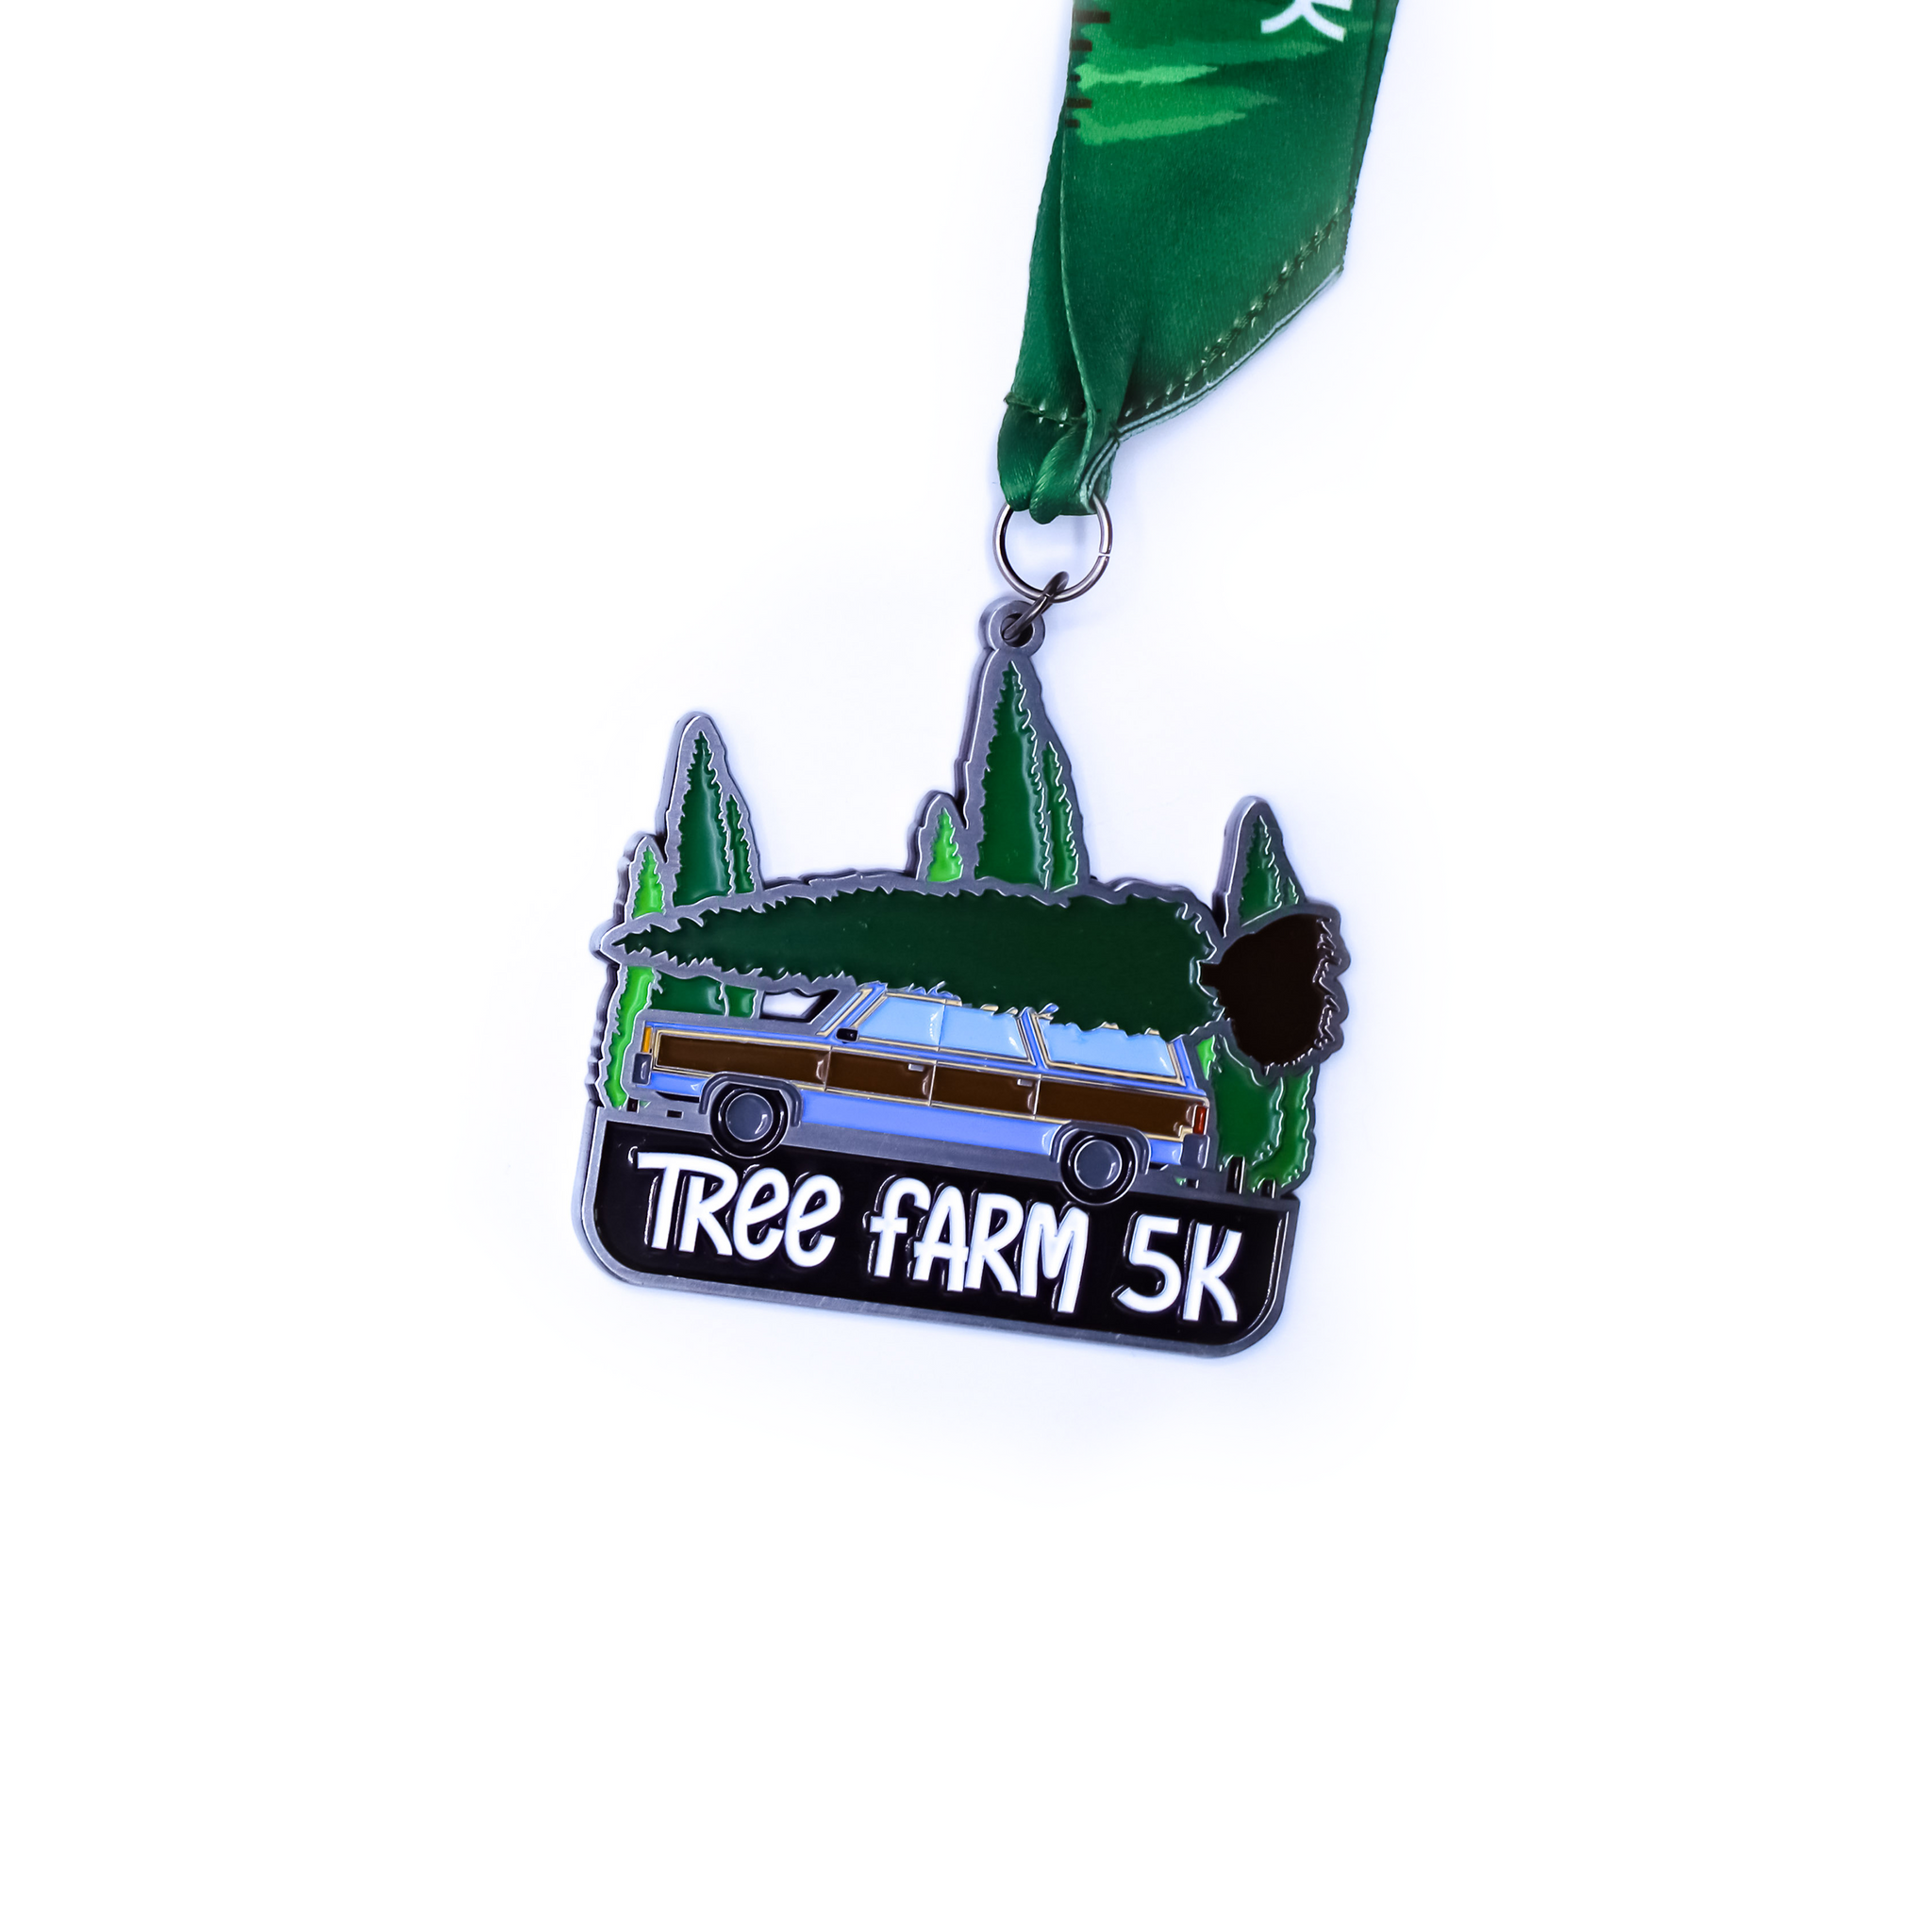 Tree Farm 5k - Entry + Medal